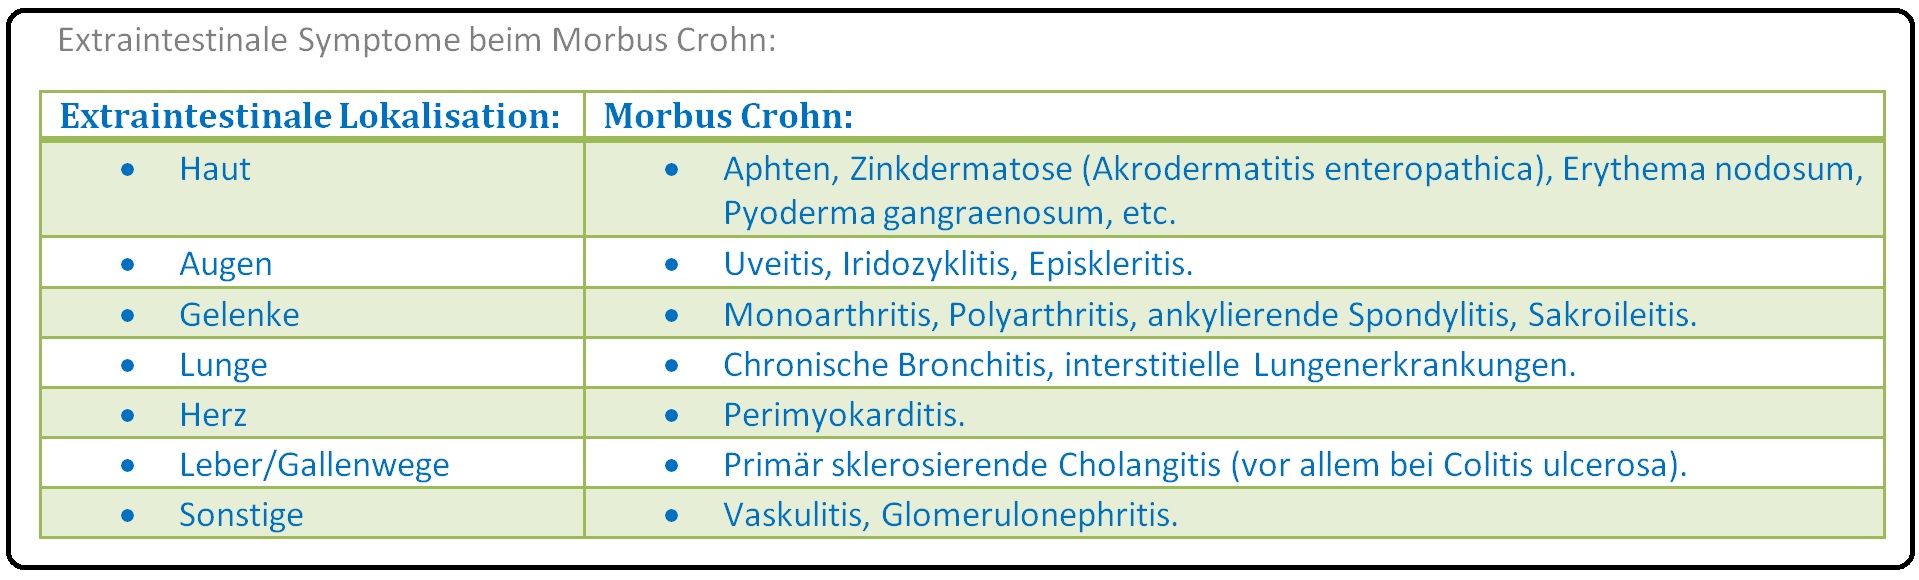 566 Extraintestinale Symptome beim Morbus Crohn